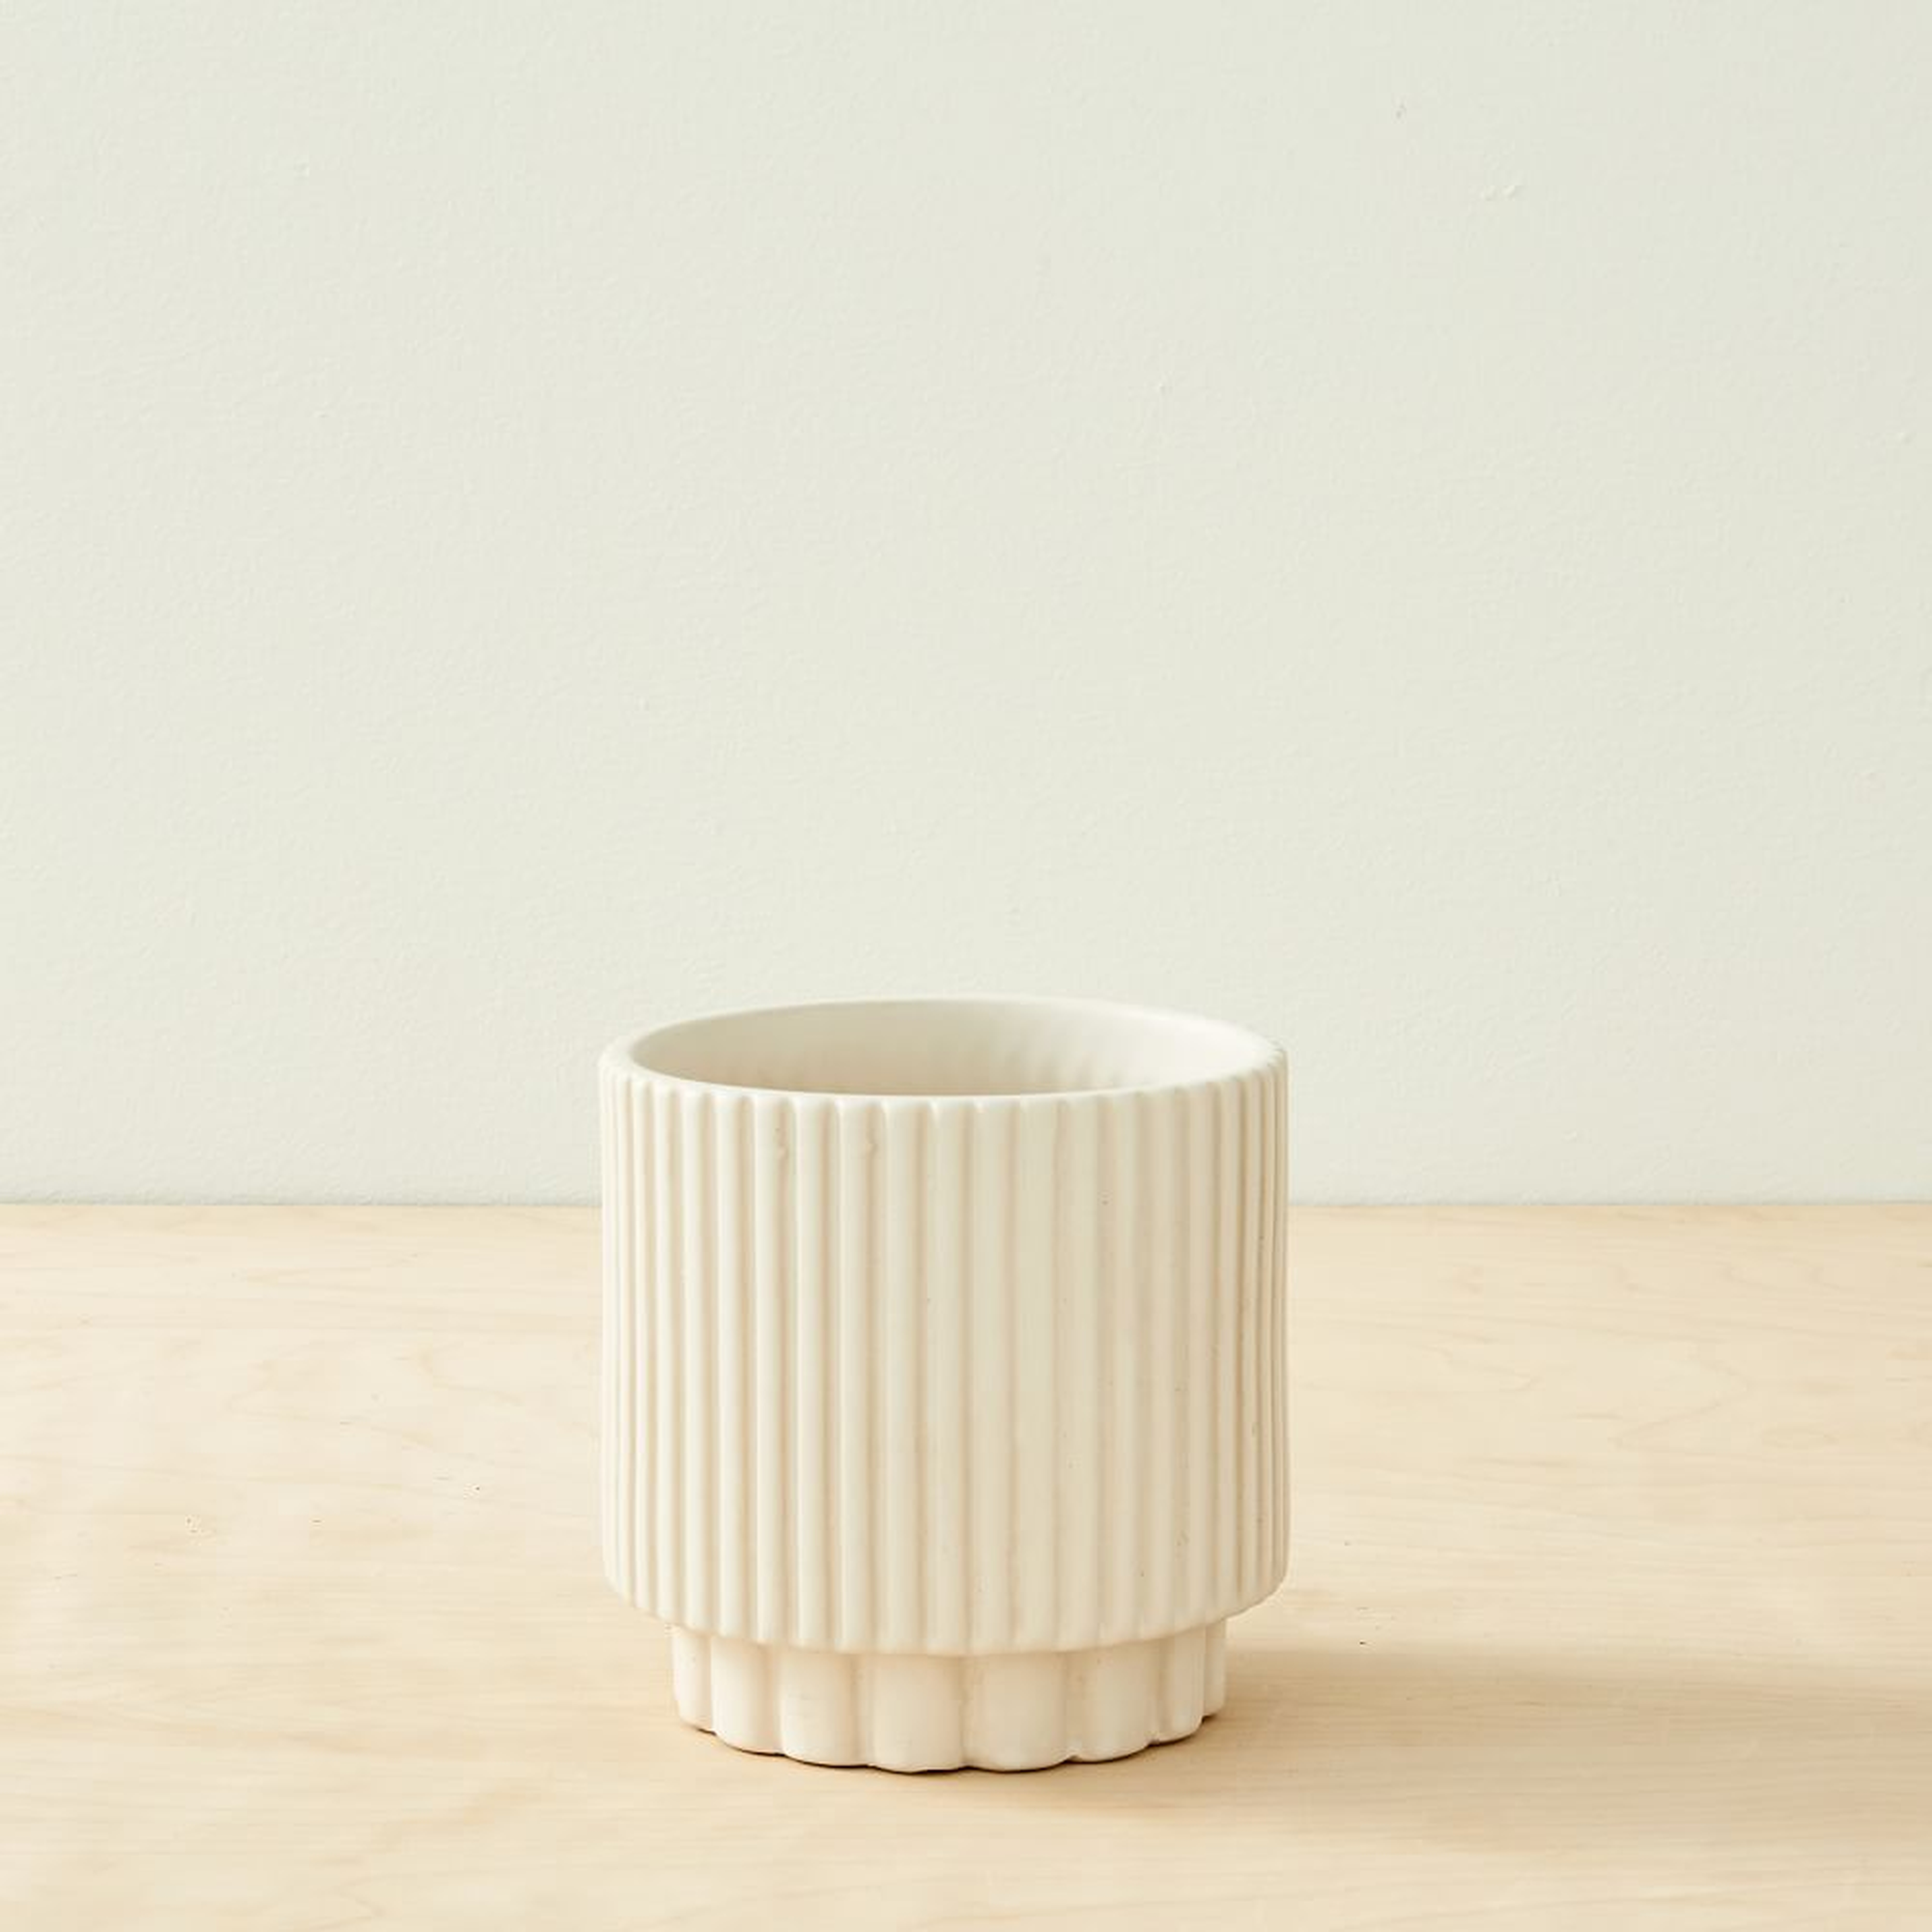 Fluted Ceramic Indoor/Outdoor Tabletop Planter, 5.7"D x 5.9"H, White - West Elm